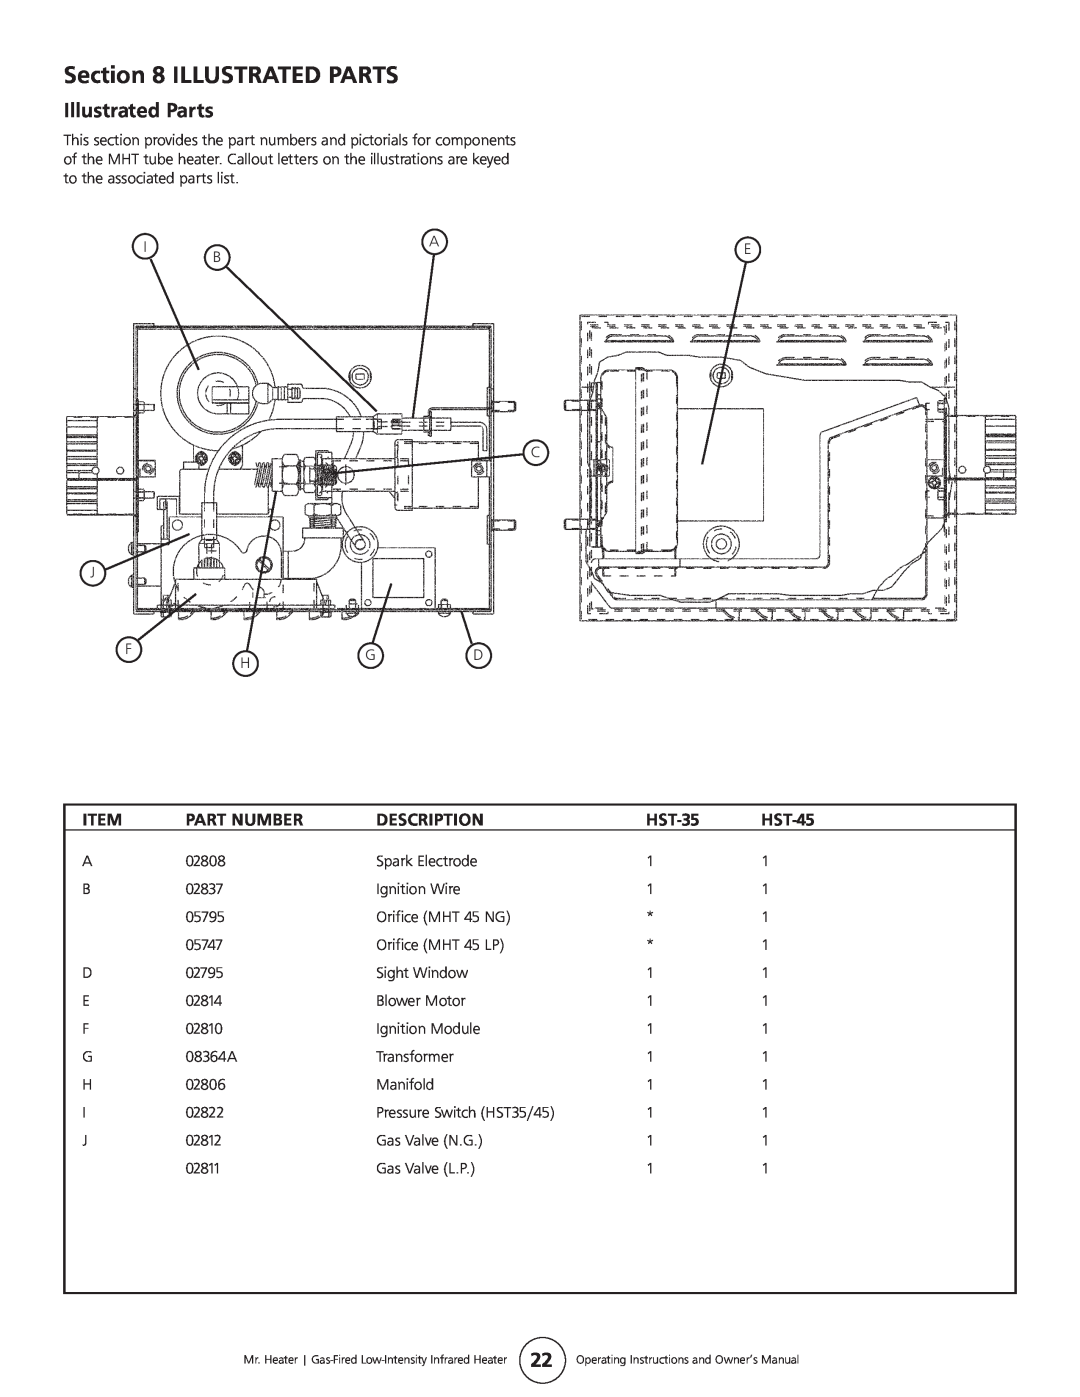 Mr. Heater MHT 45 owner manual Illustrated Parts, Part Number, Description, HST-35, HST-45 